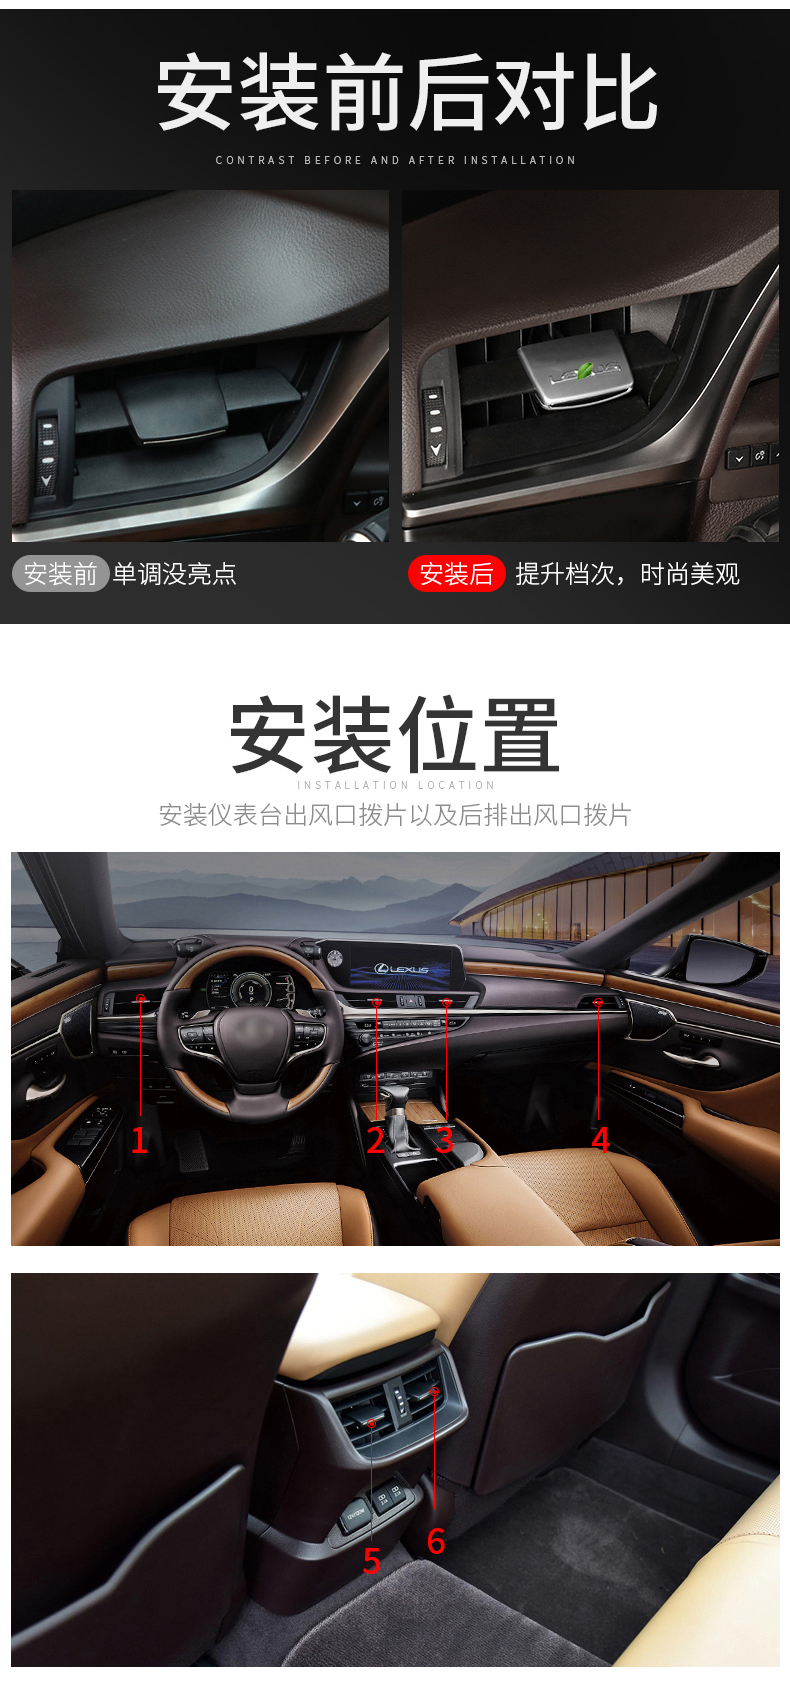 Ốp trang trí điều hòa Lexus ES200, ES260, ES300H - ảnh 9